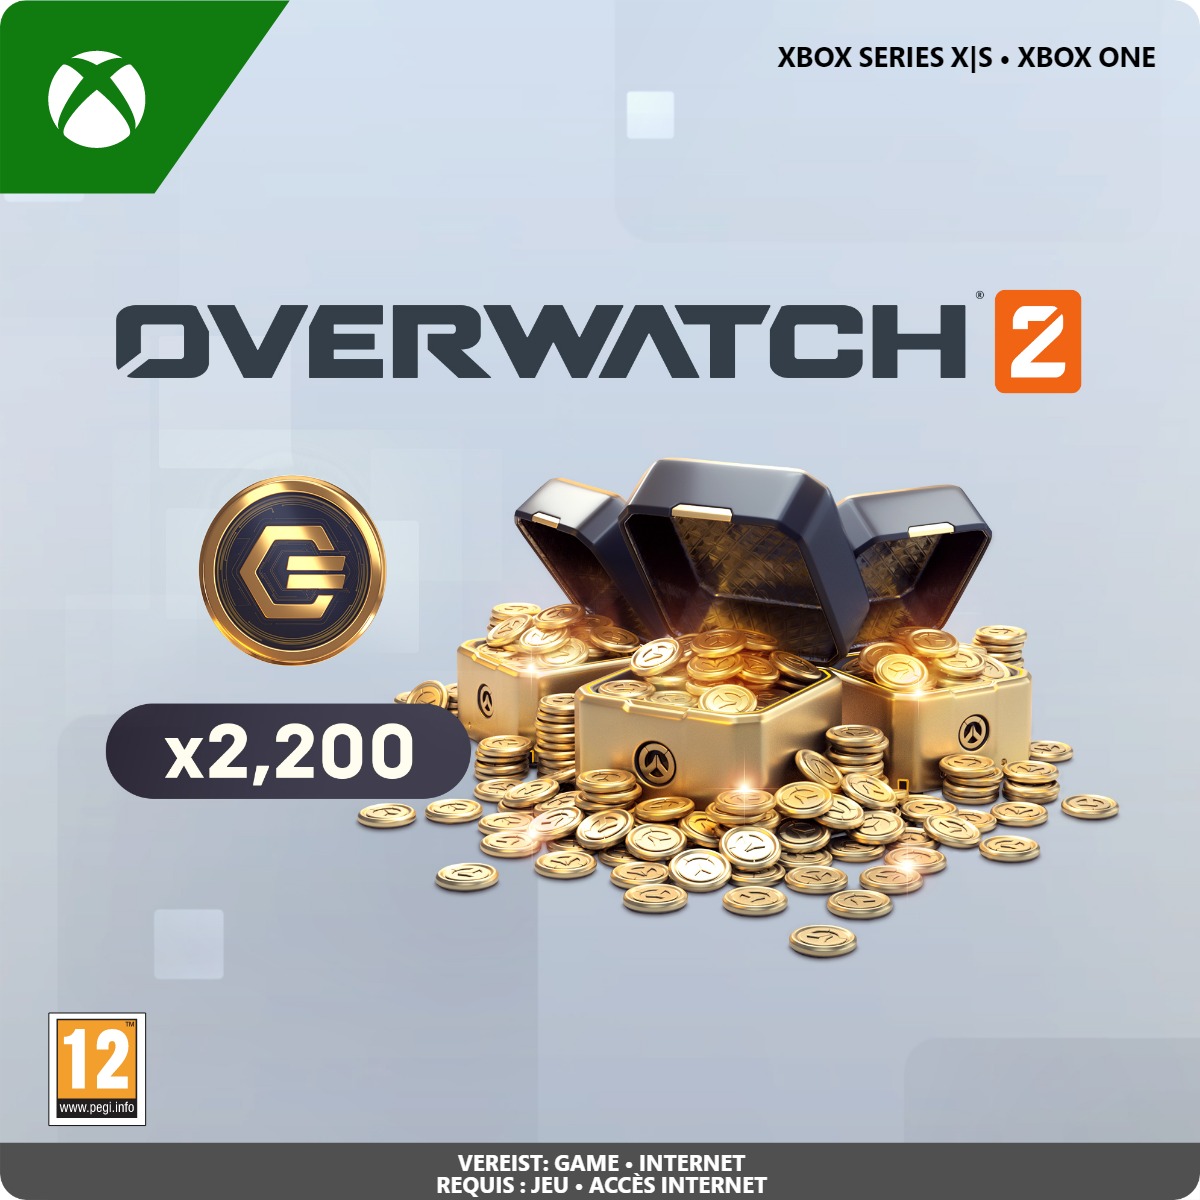 2000 Overwatch 2 Coins 